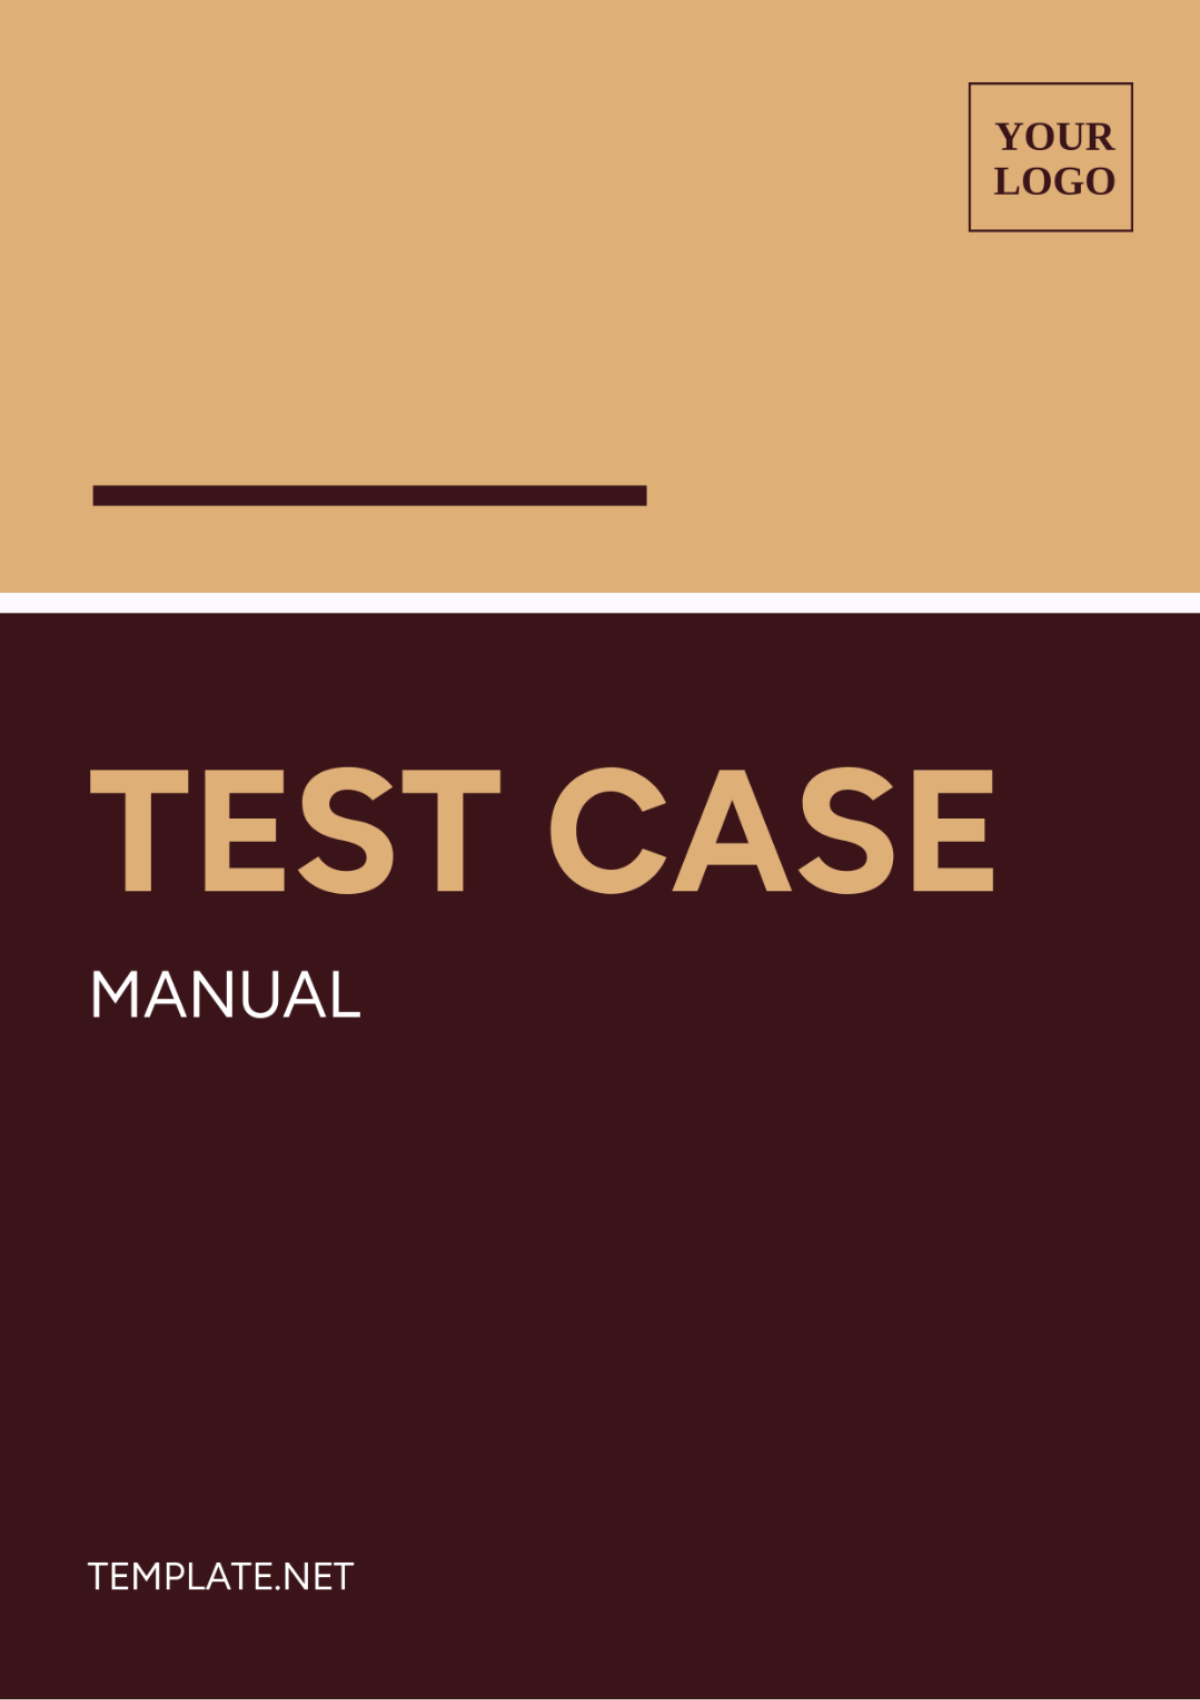 Test Case Manual Template